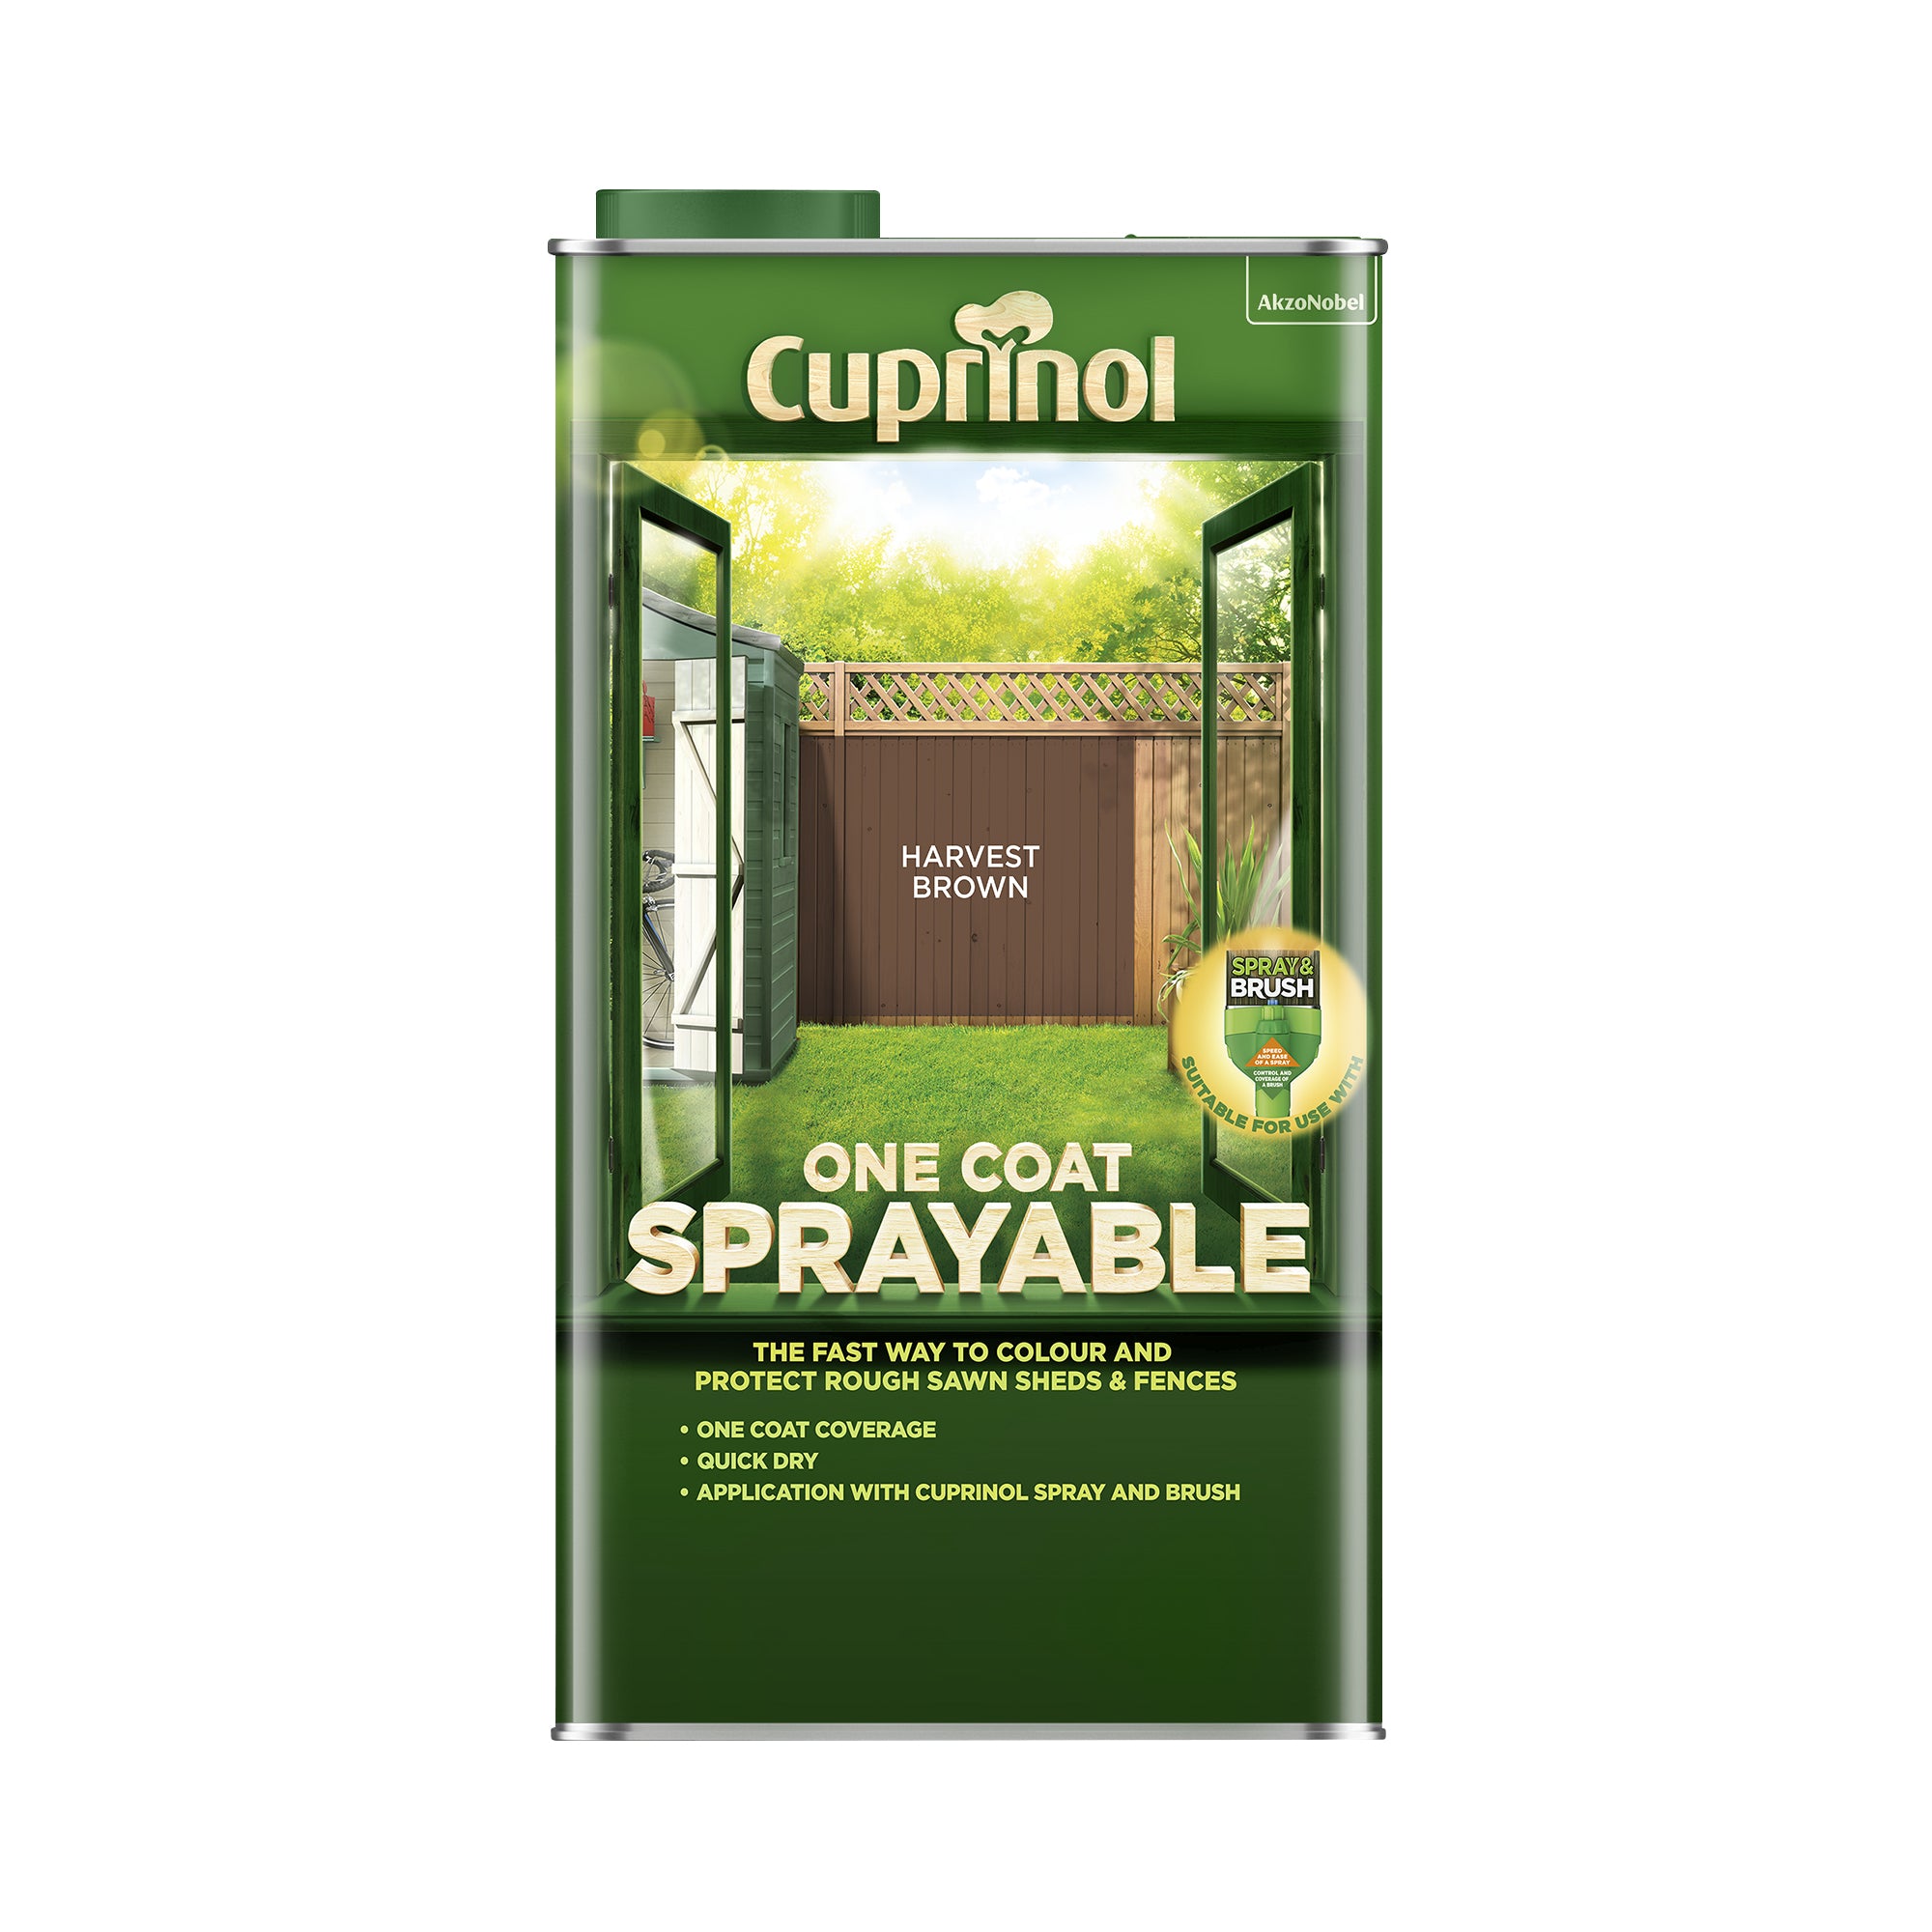 Cuprinol Spray & Fence Treatment Harvest Brown 5L